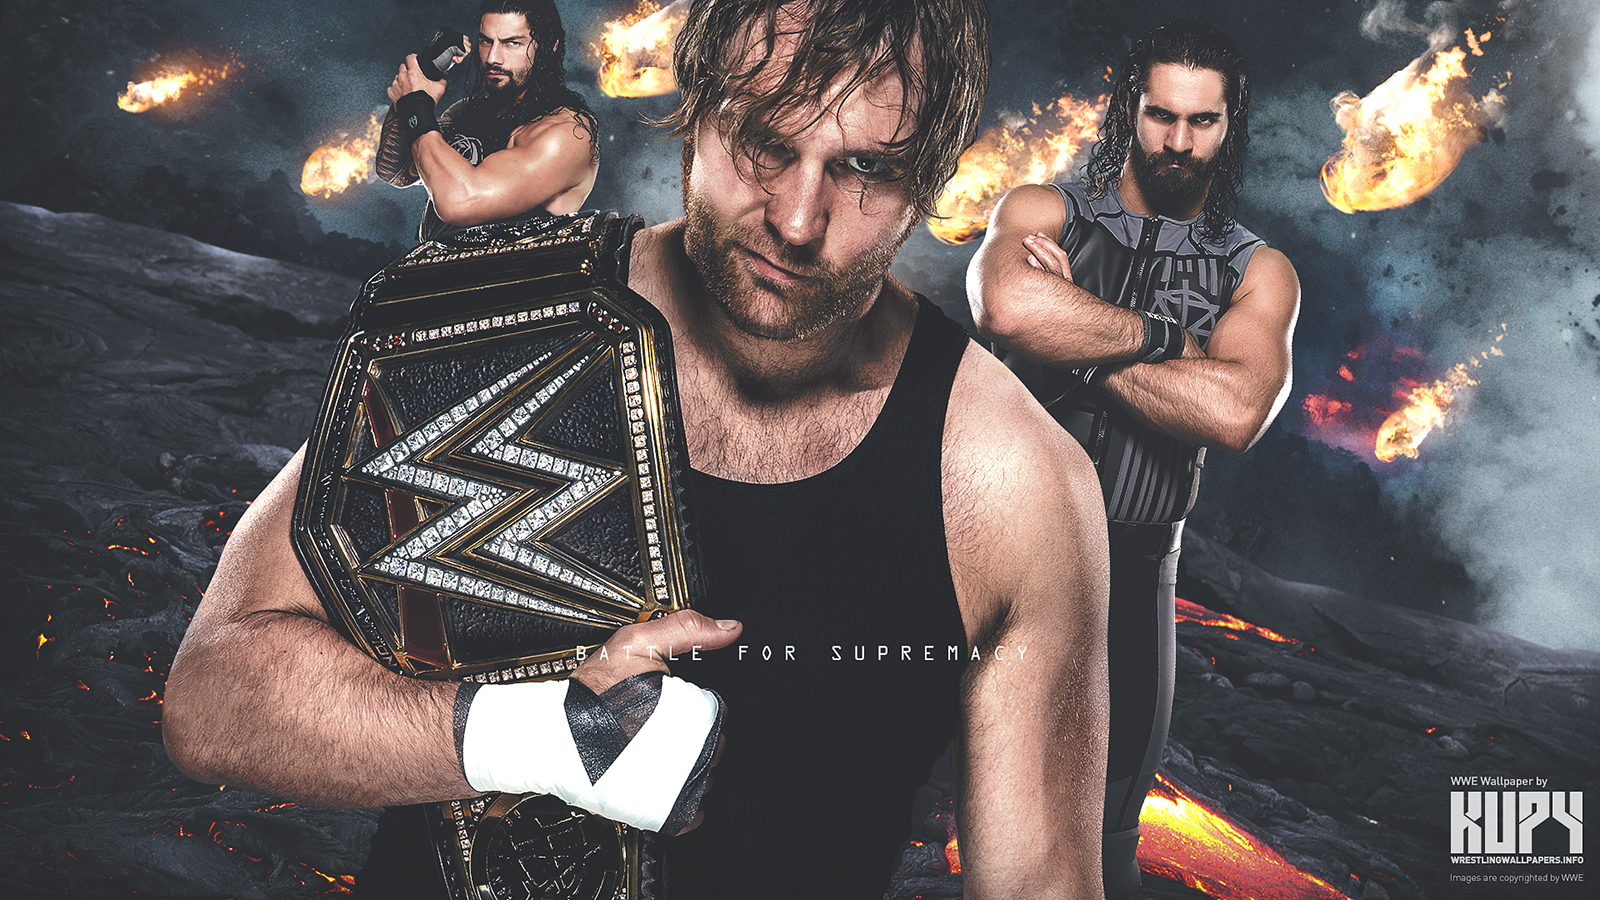 NEW Battle for Supremacy: Dean Ambrose (c) vs. Seth Rollins vs. Roman  Reigns WWE Battleground wallpaper - Kupy Wrestling Wallpapers